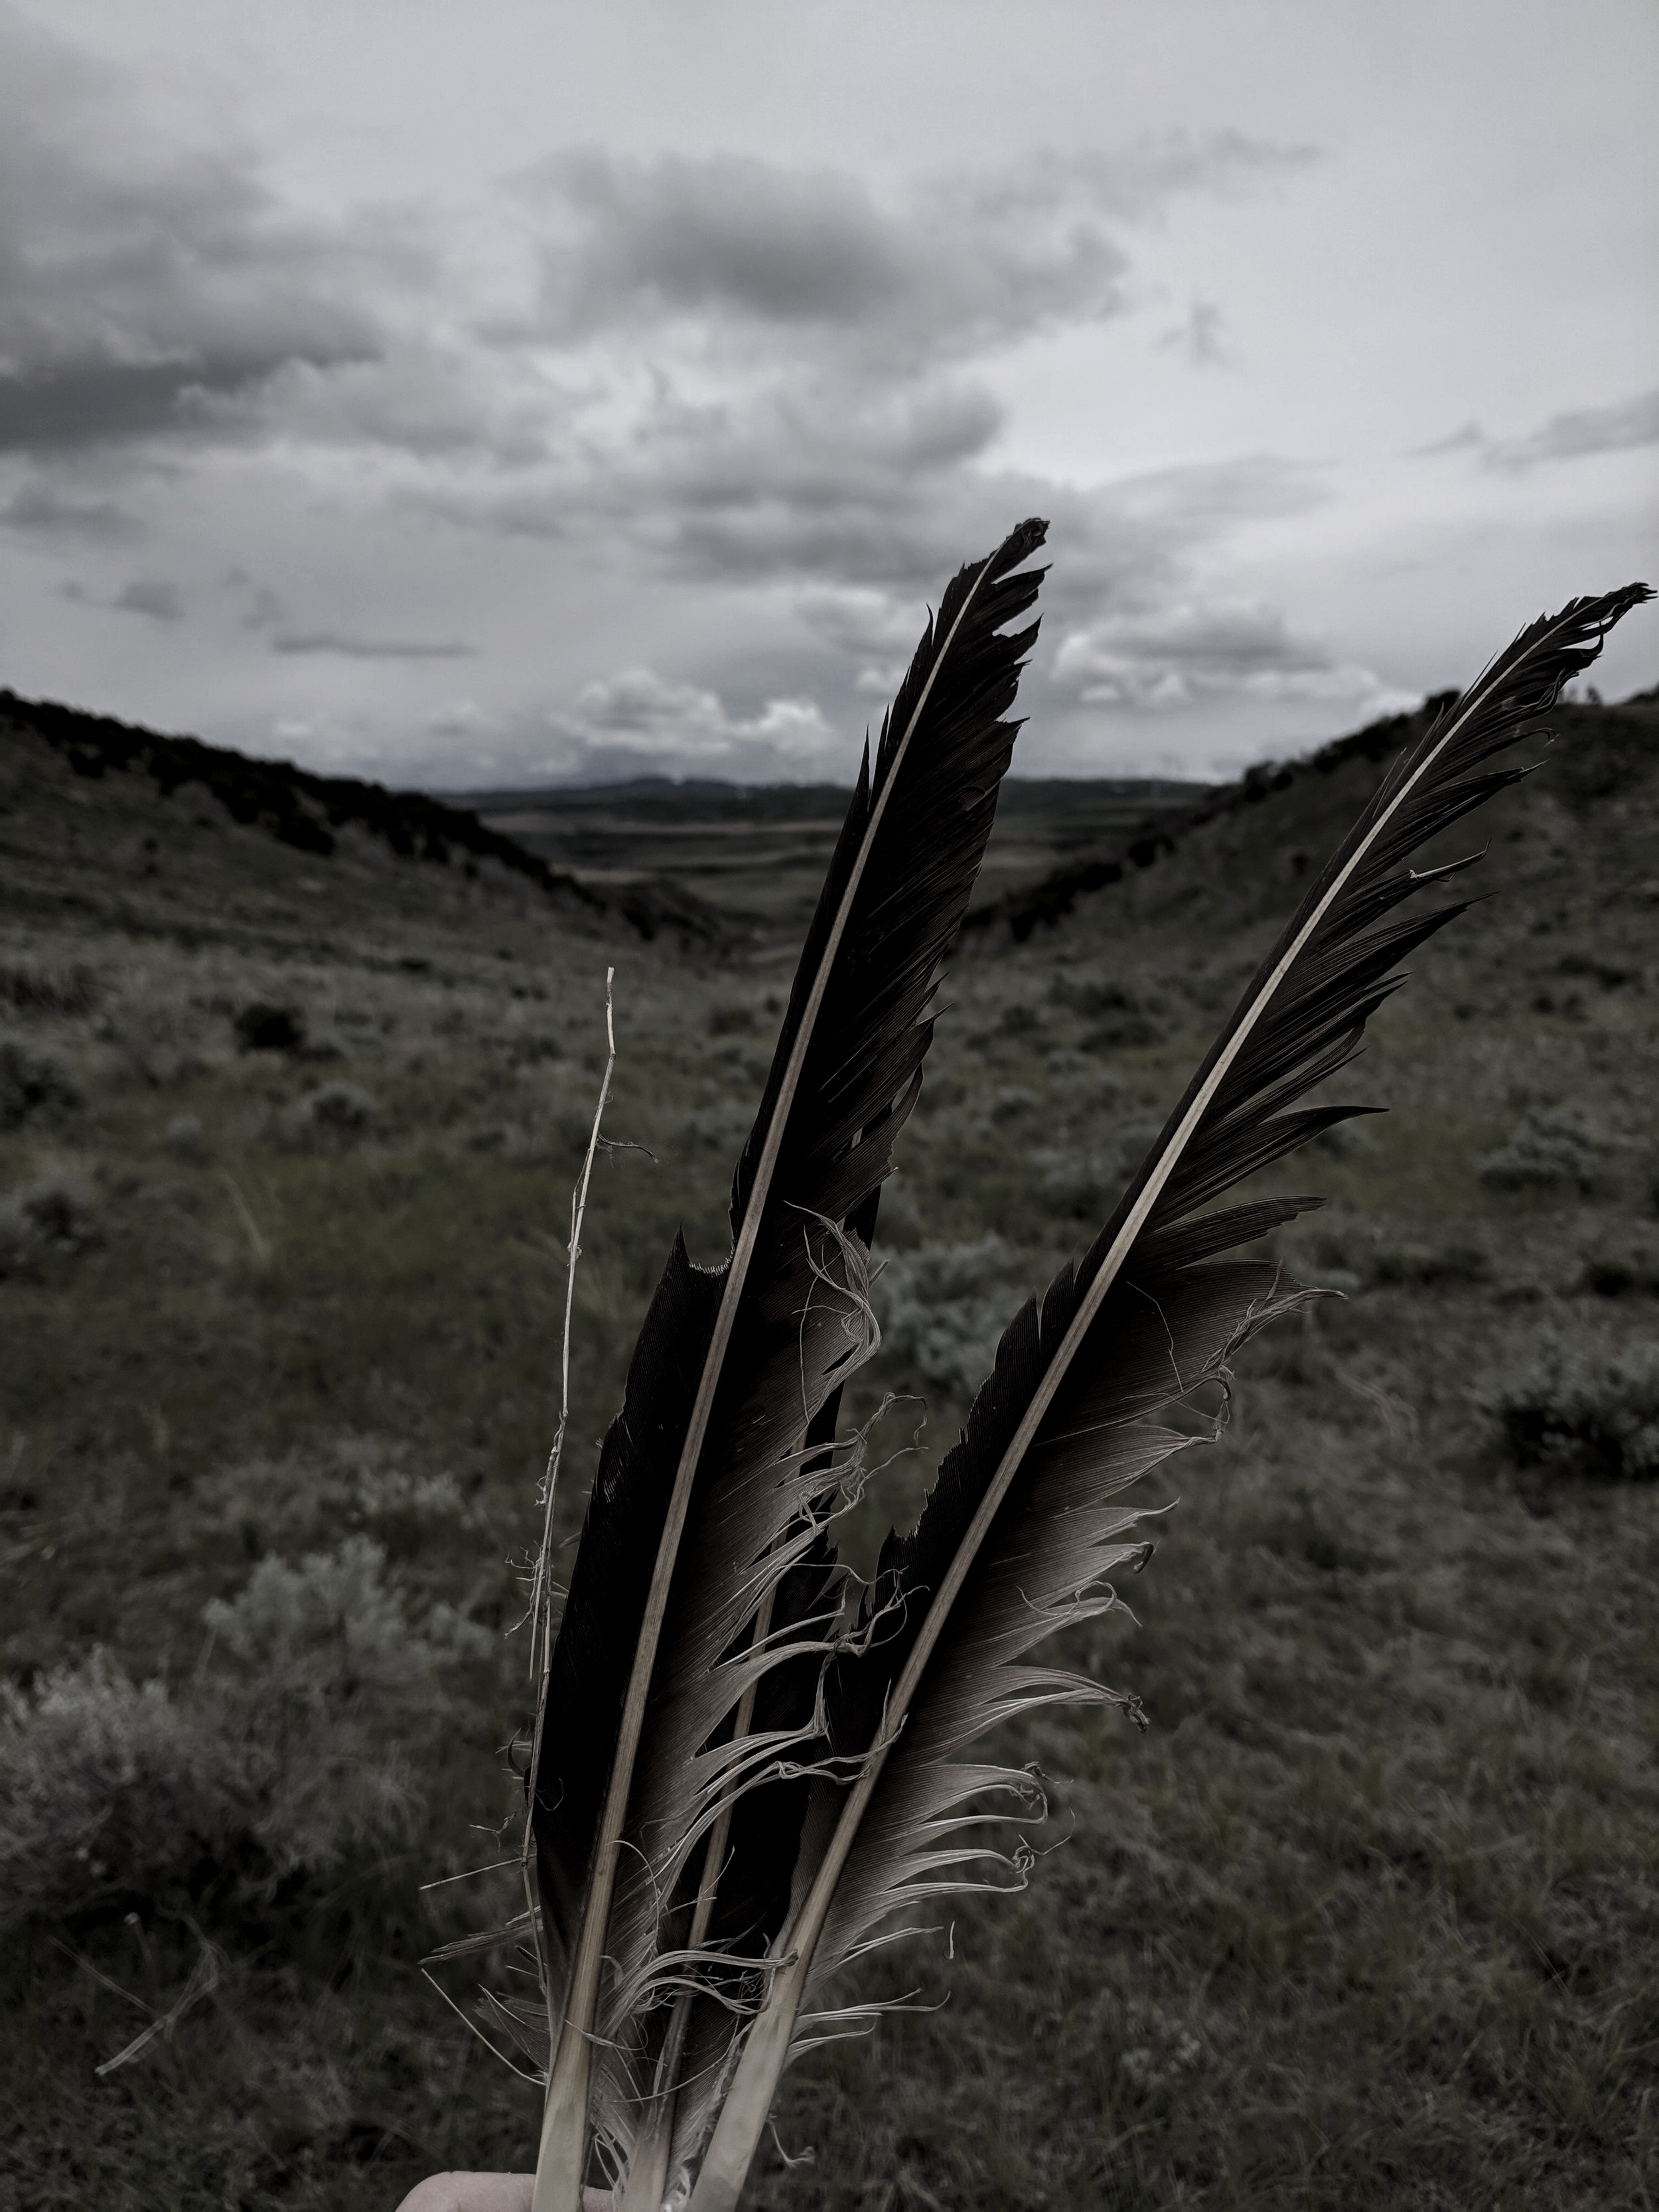 A 'Zombie' Plant Roams Free on the Wyoming Prairie